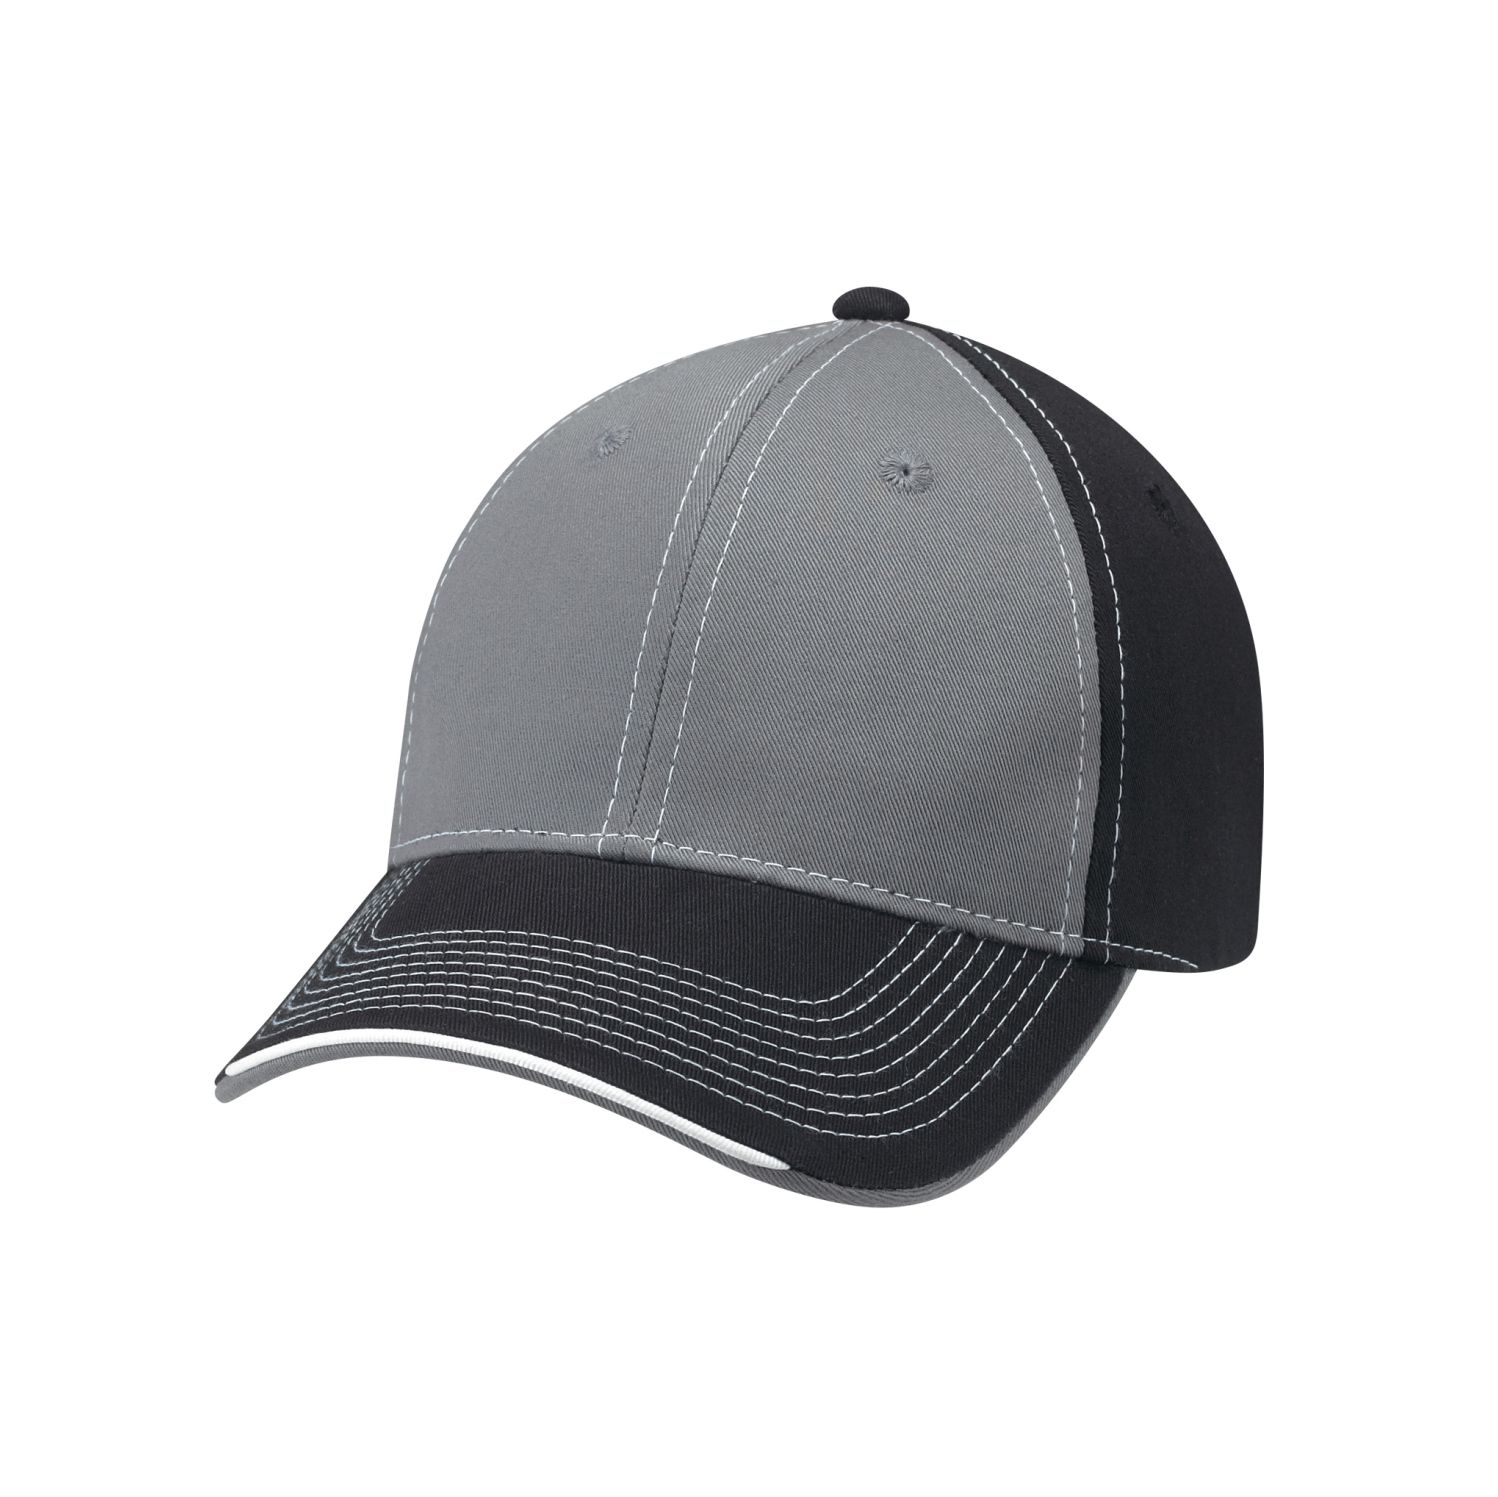 AJM 6-Panel Constructed Full-Fit Hat #6F617M Black / Slate / White